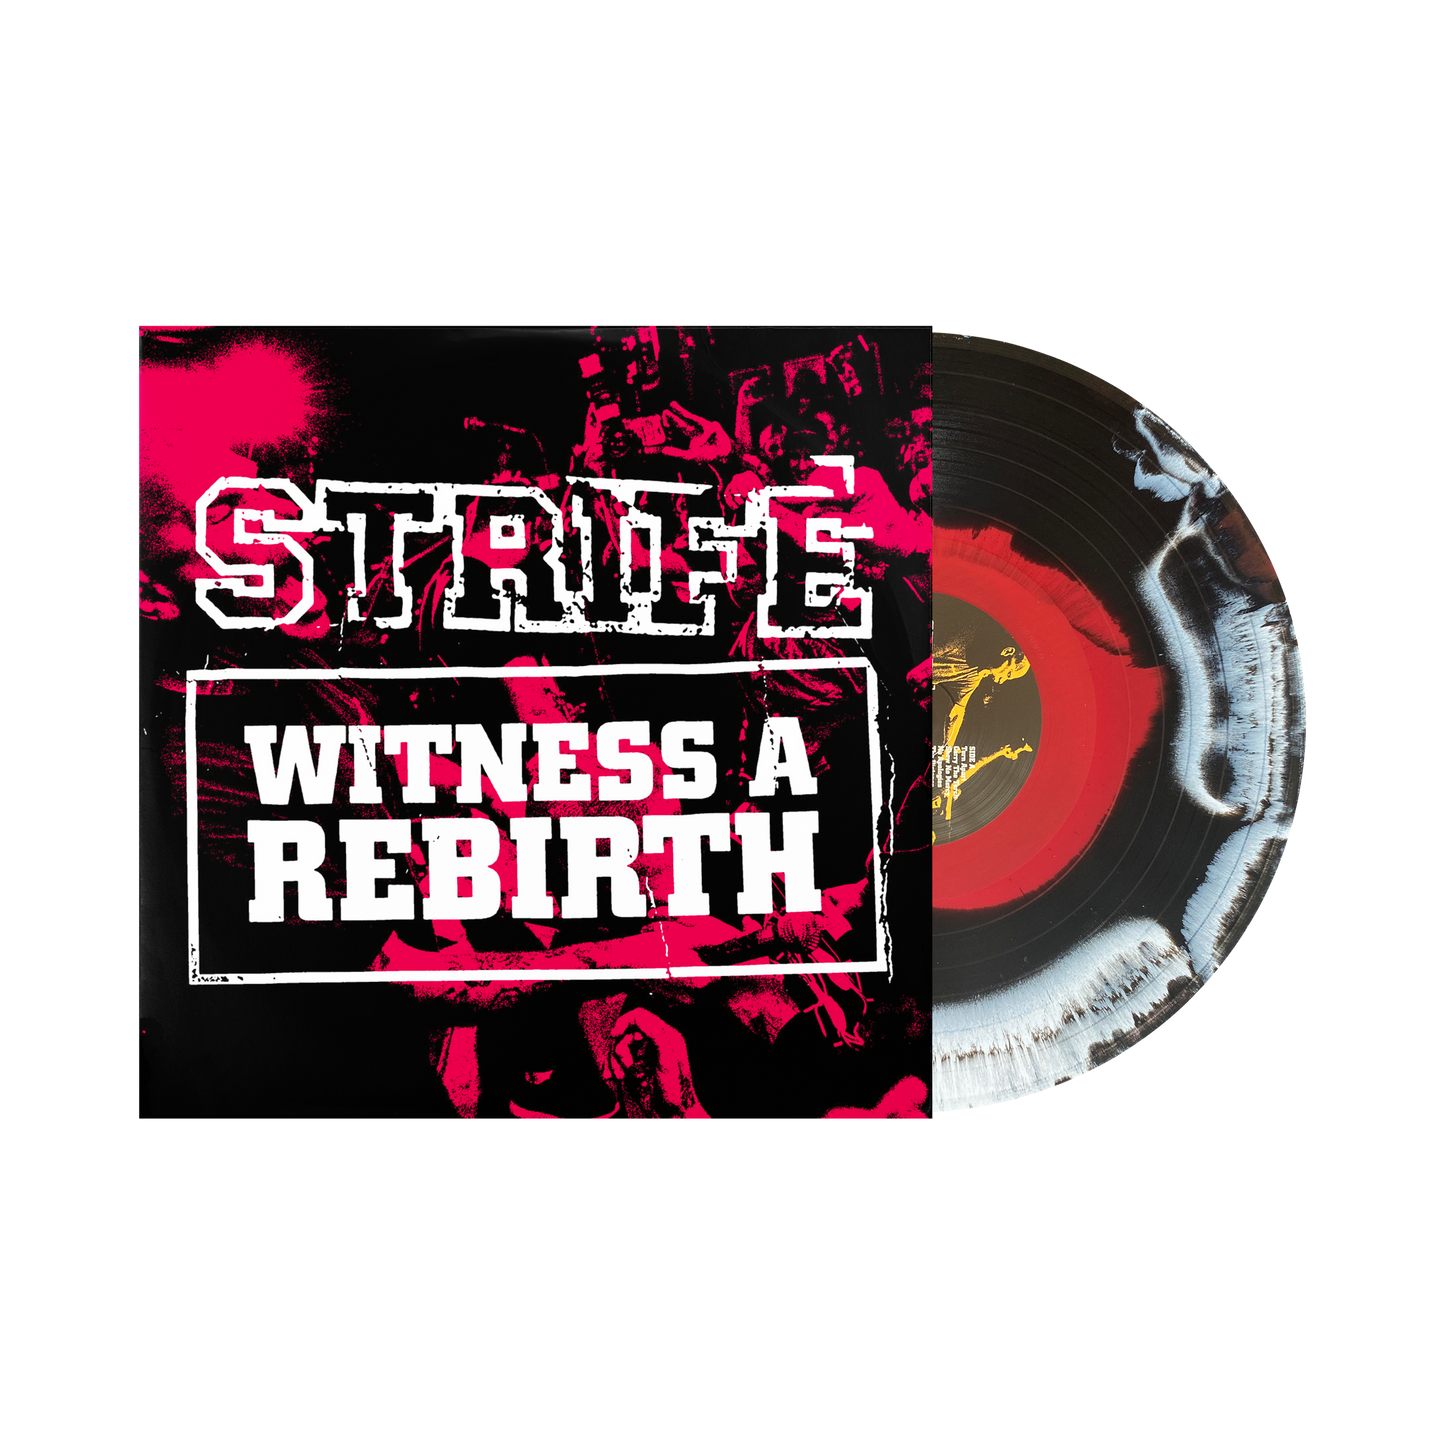 Strife  "Witness A Rebirth" LP